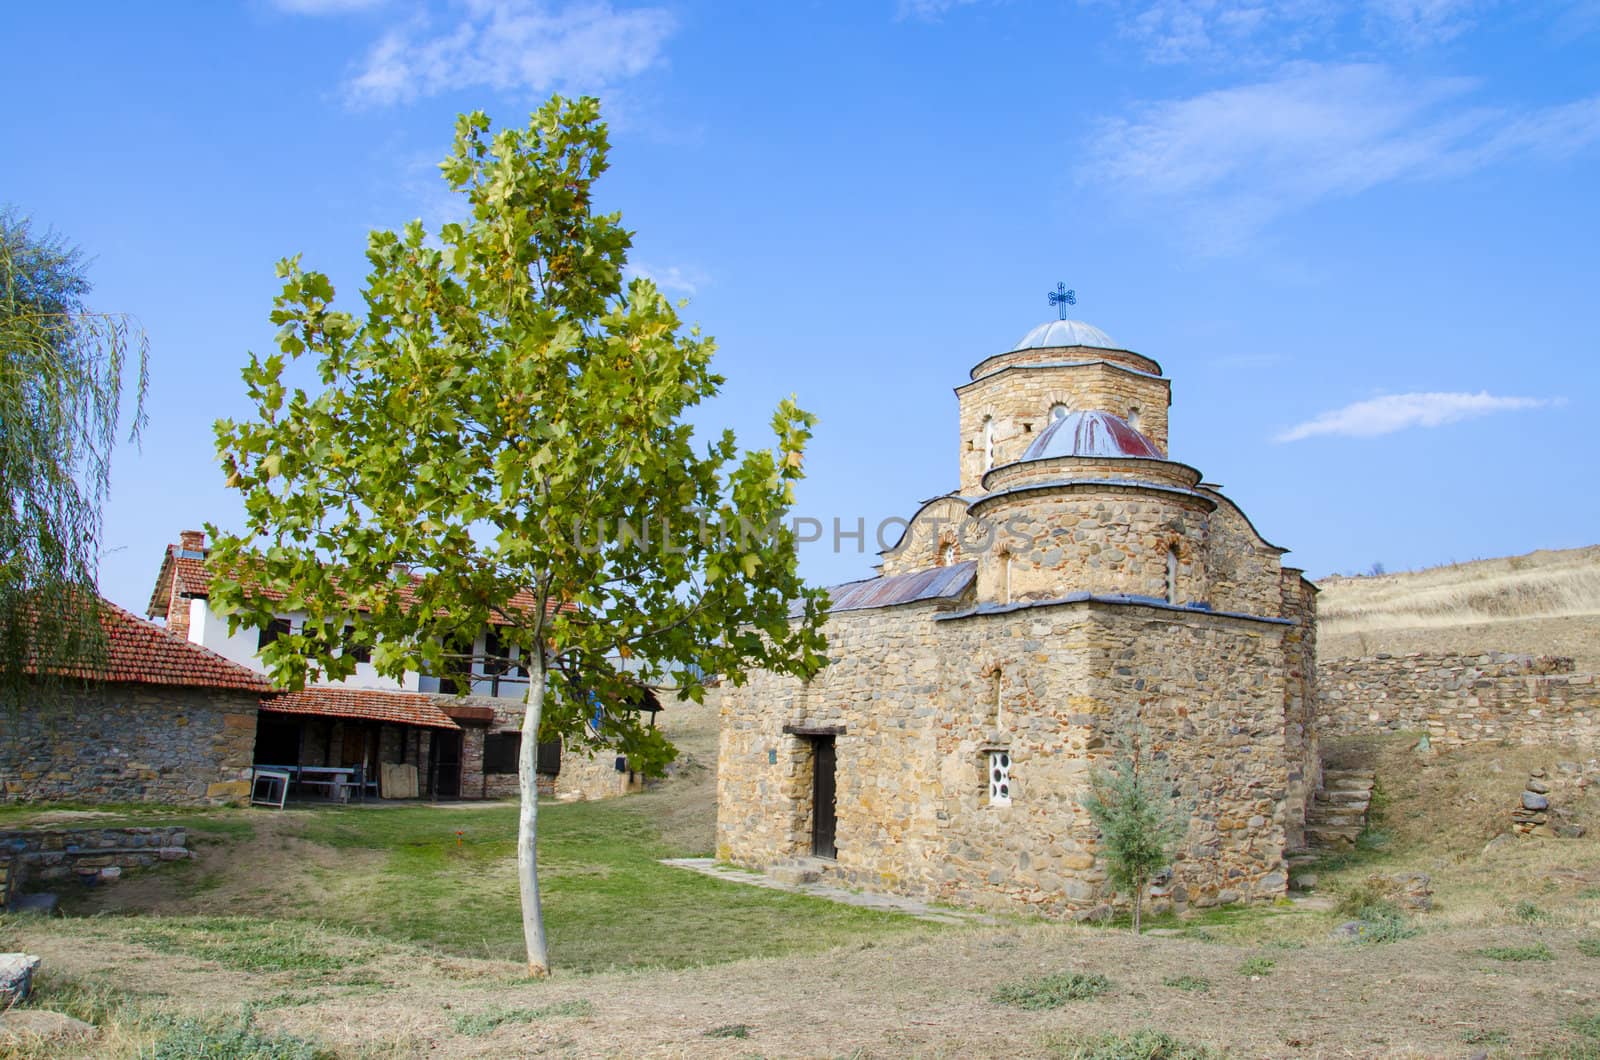 ancient church with green tree and blue sky. St. Nikola old church near ancient town ruins Bargala in Macedonia